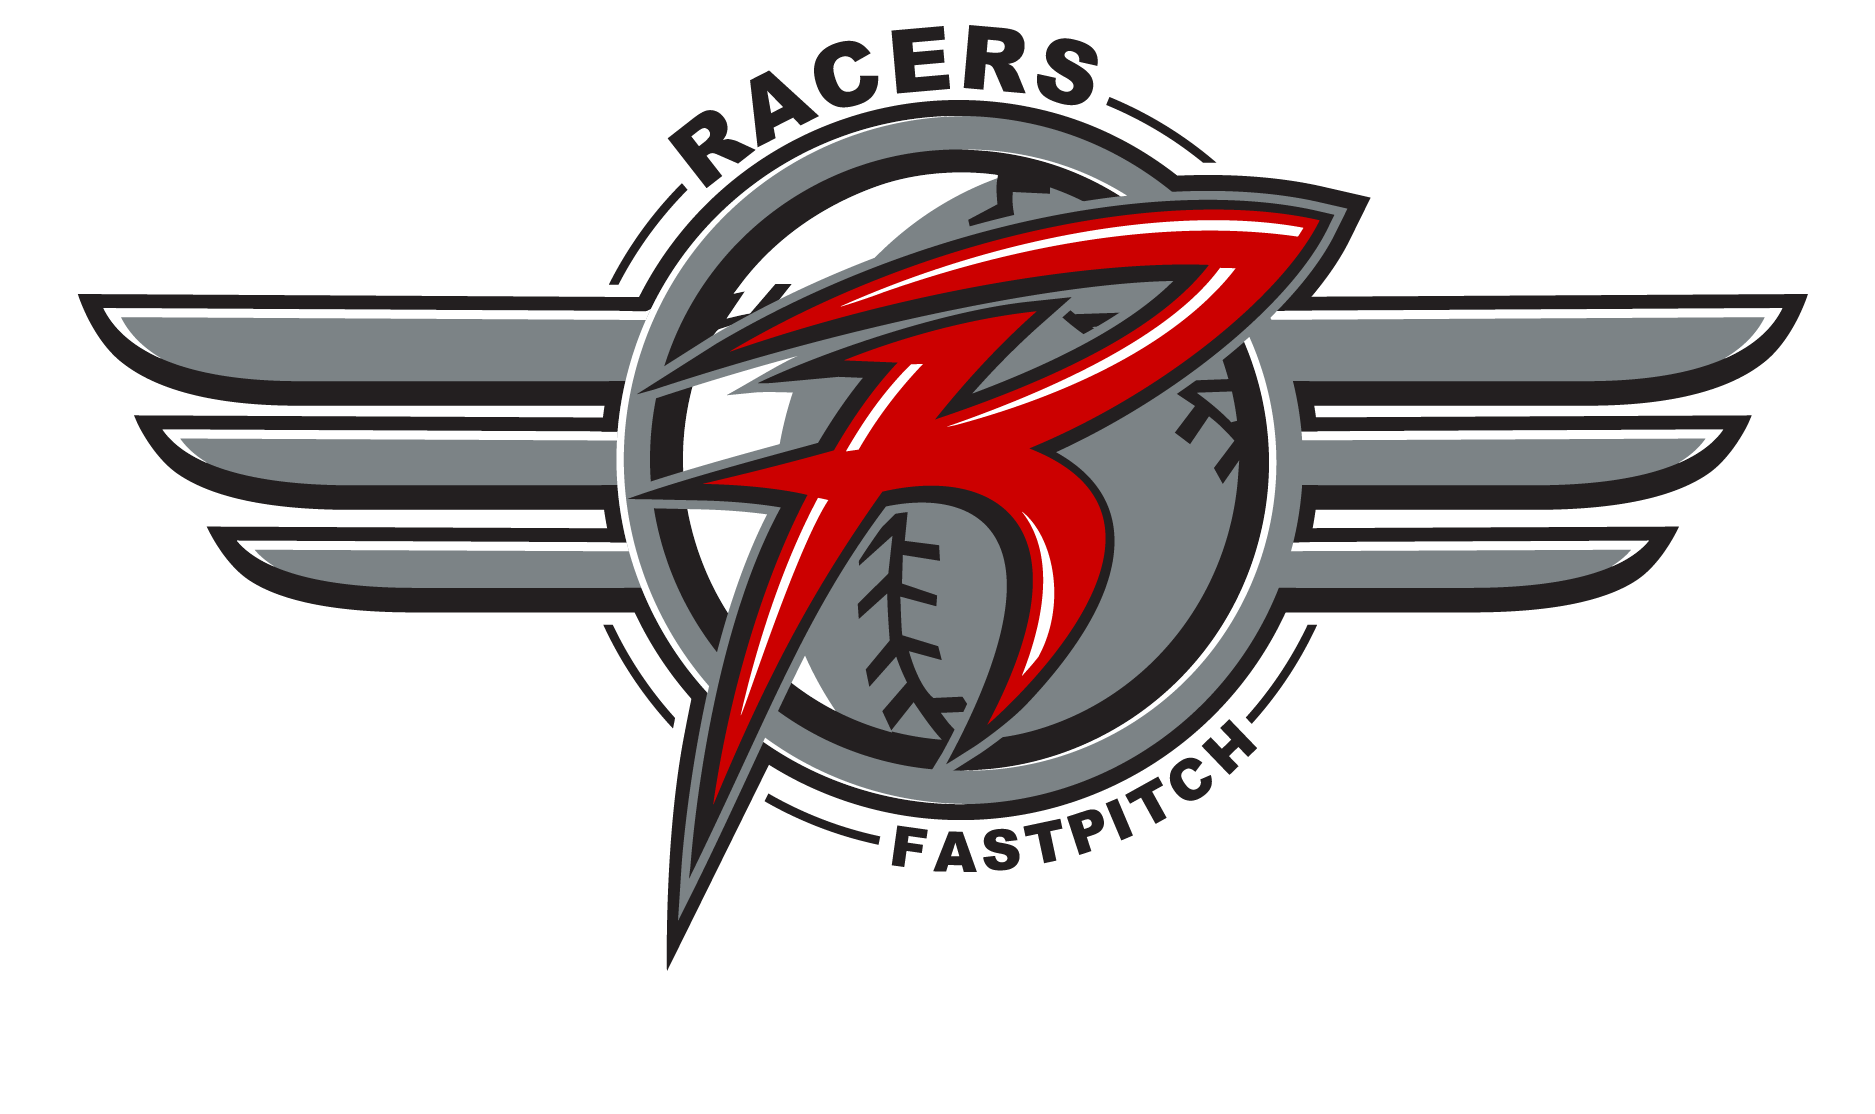 racersFastpitch logo